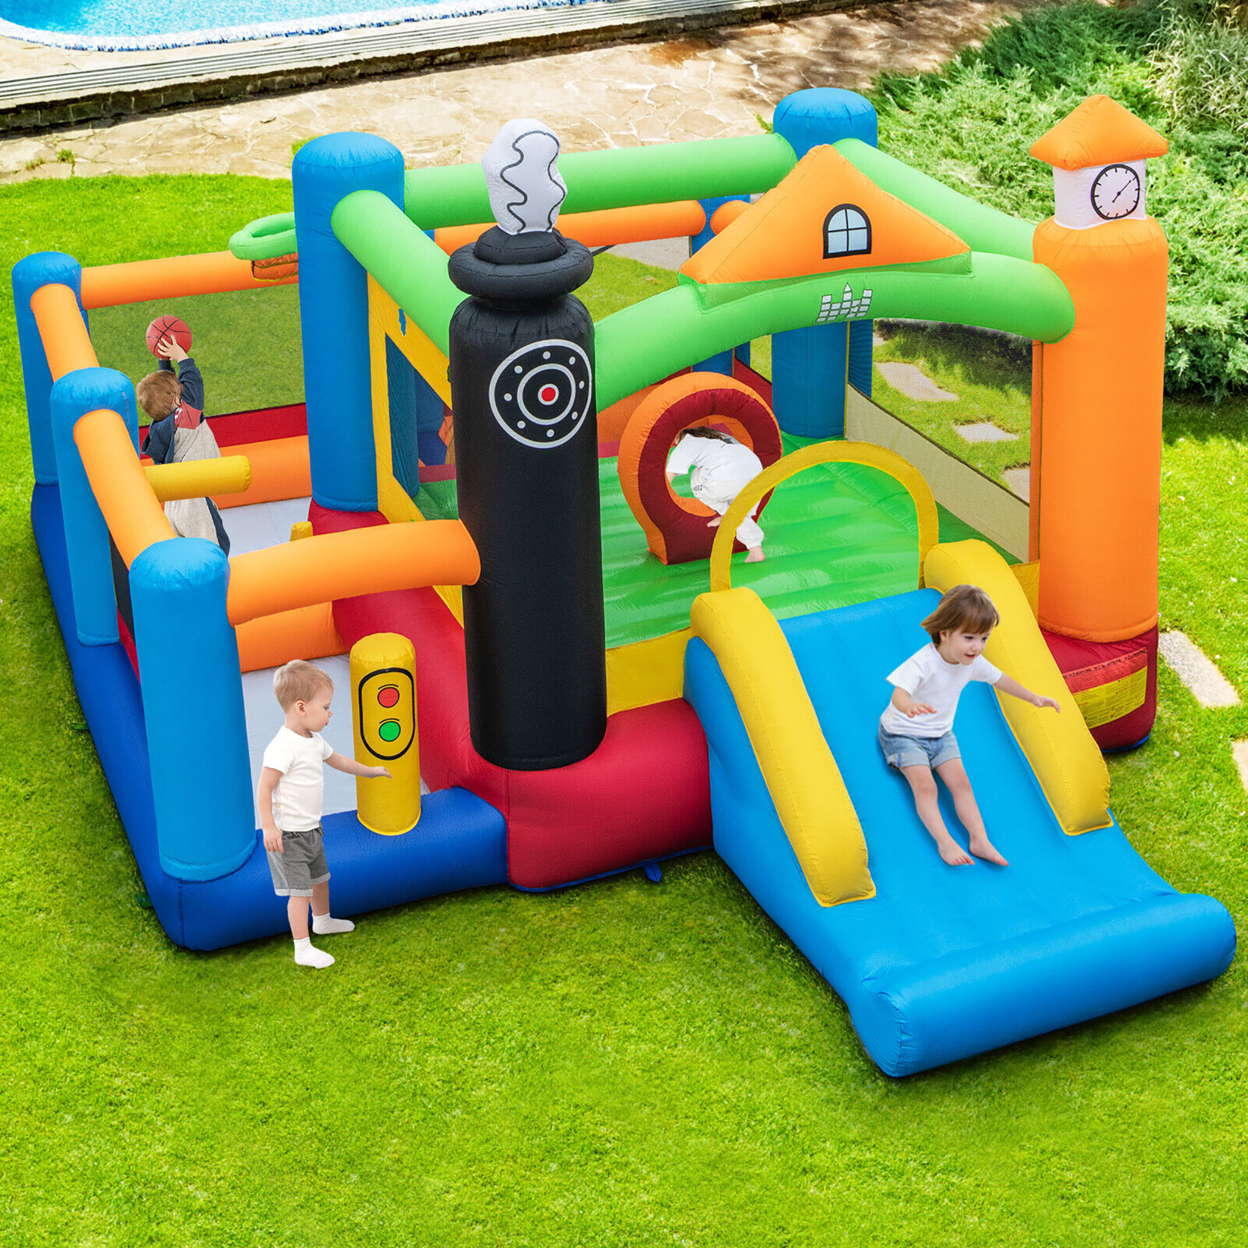 Train-Themed Inflatable Bounce Castle Kids Bouncer W/ Ocean Balls & 950W Blower